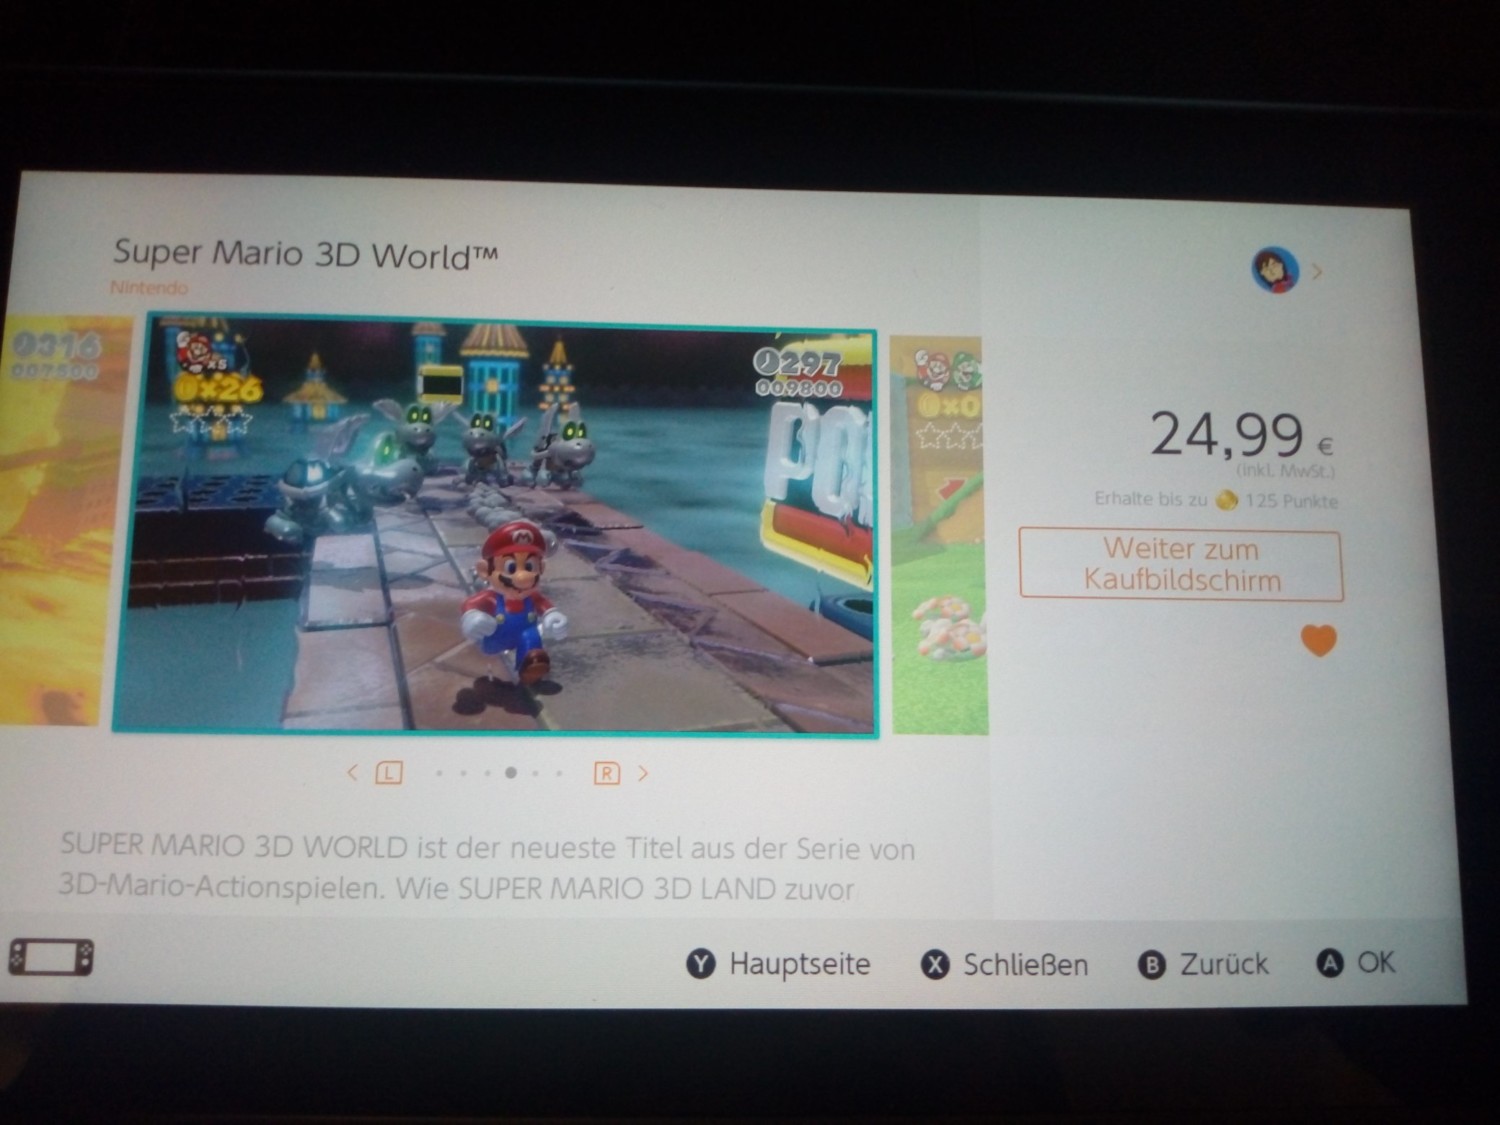 Nintendo eShop on Wii U & 3Ds 2020 - Still Better than Switch